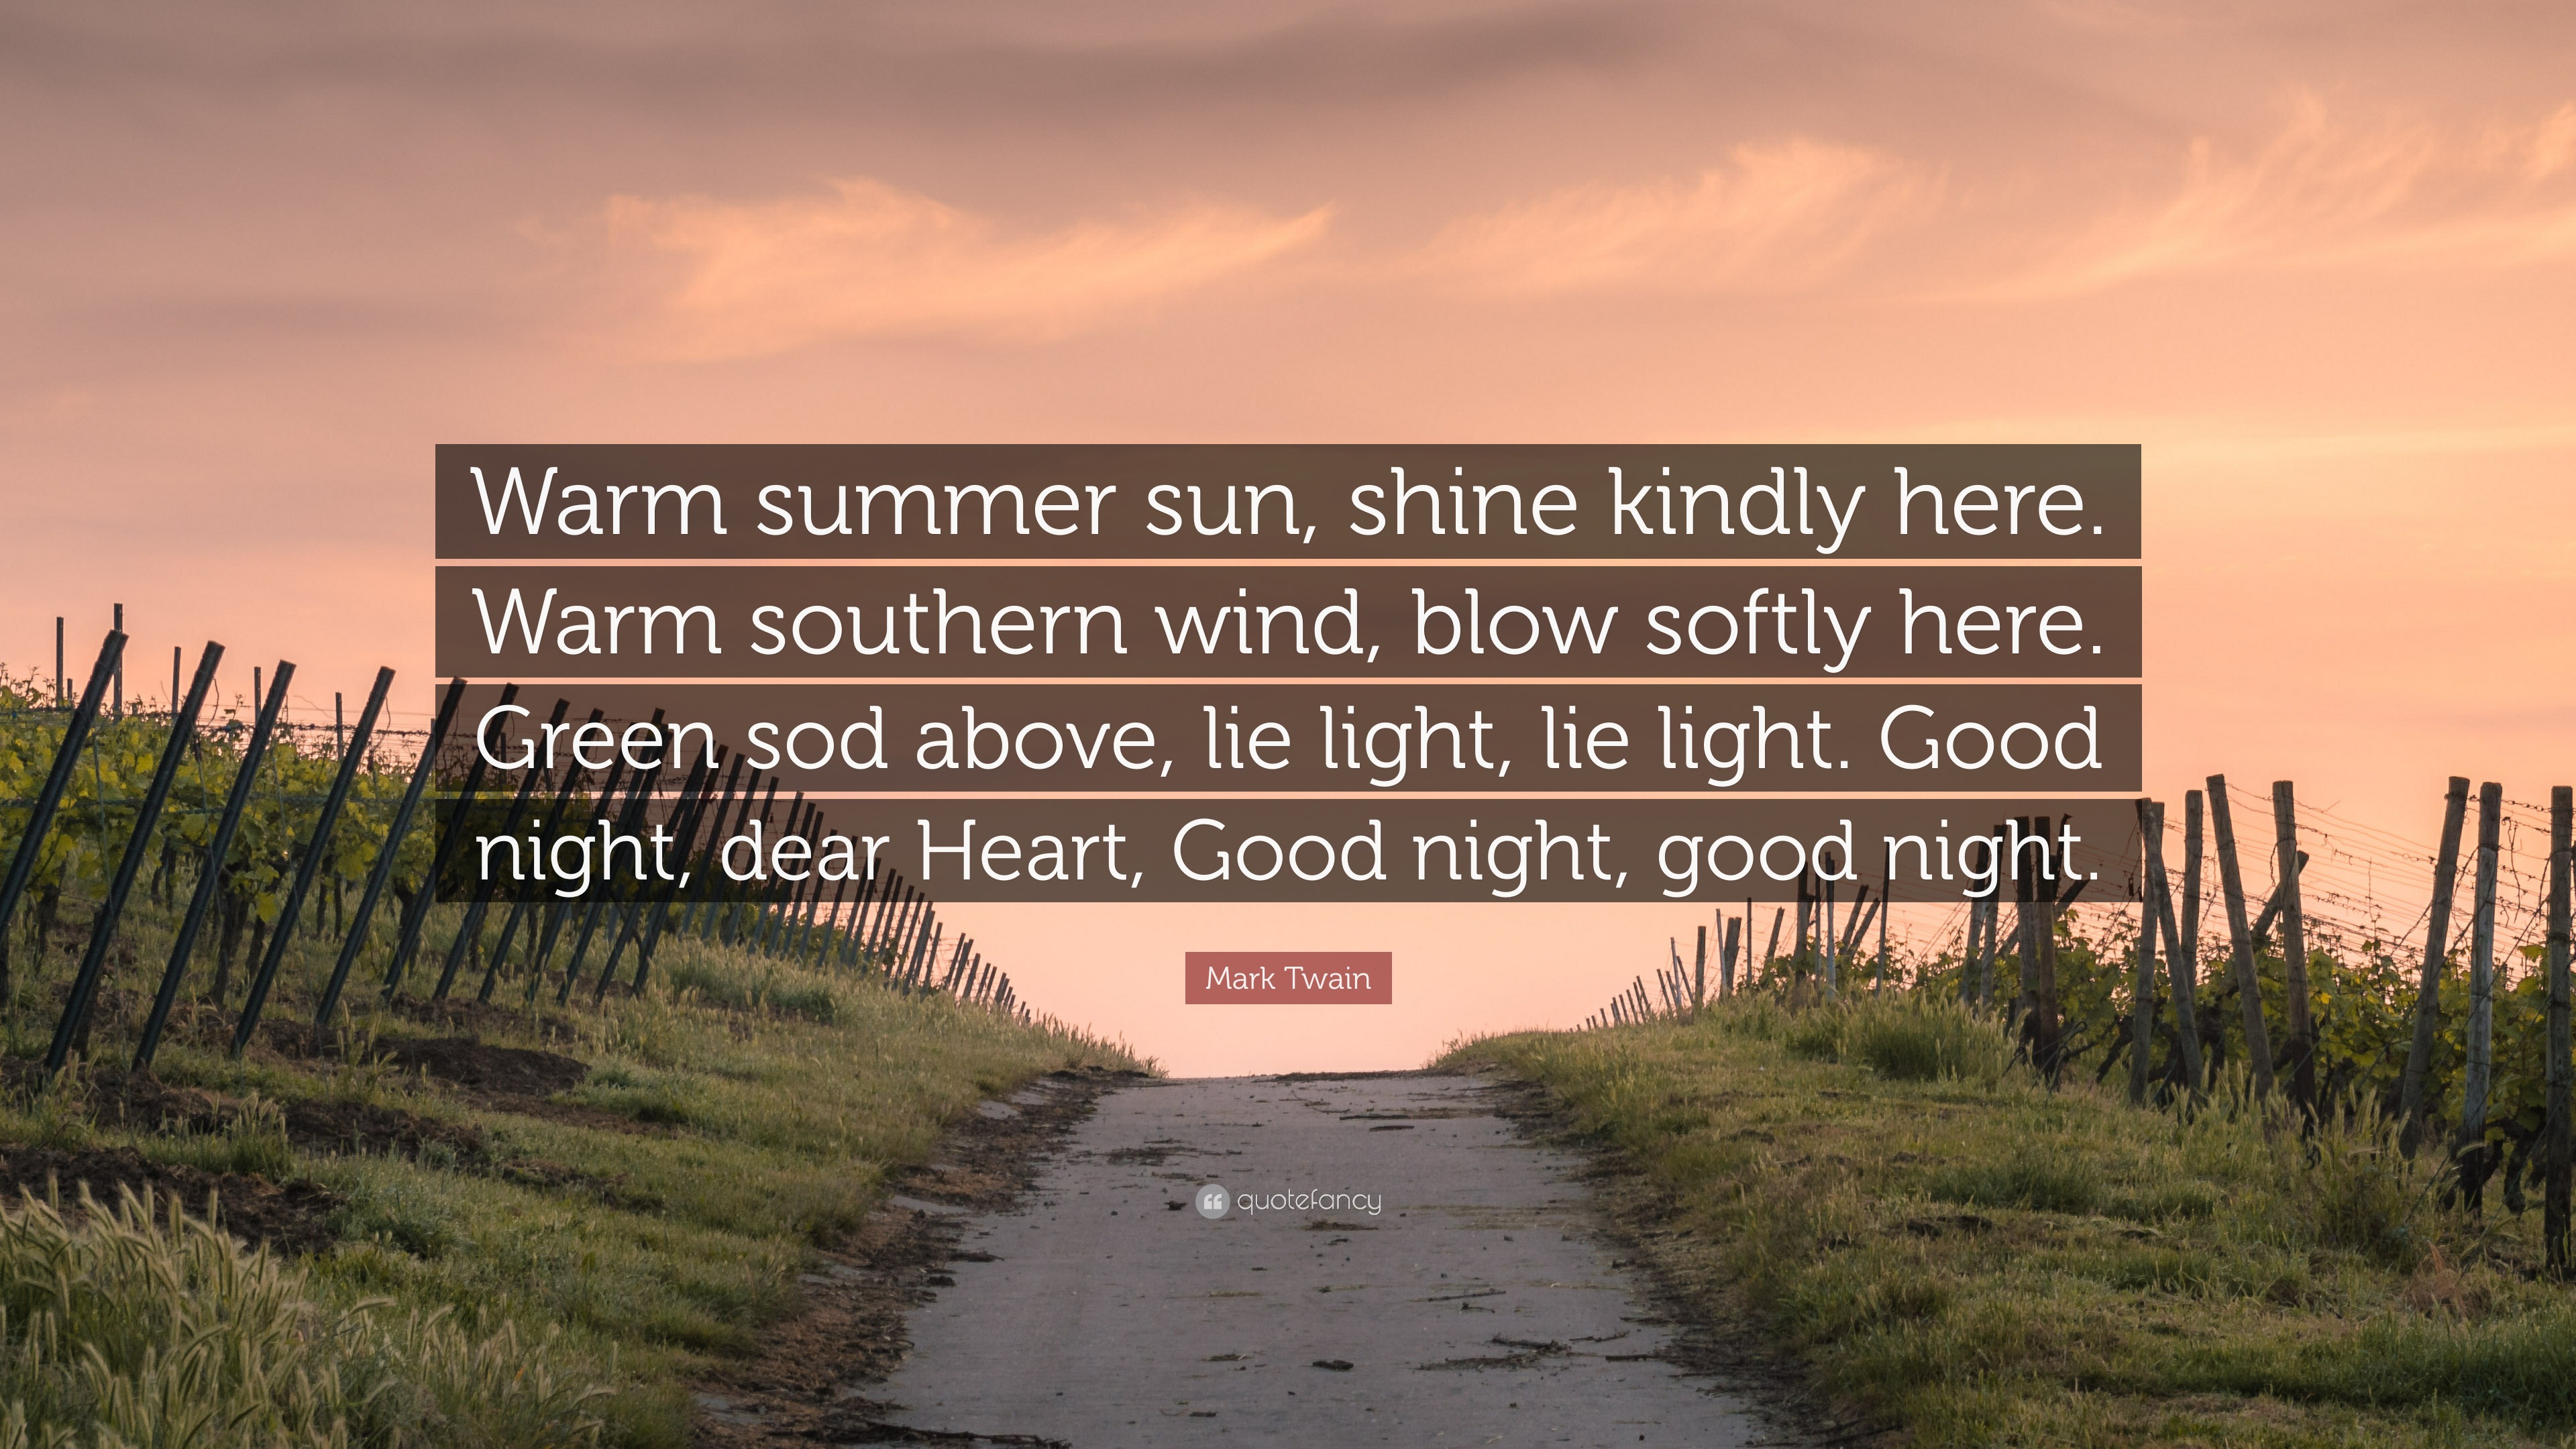 Mark Twain Quote: “Warm summer sun, shine kindly here. Warm southern